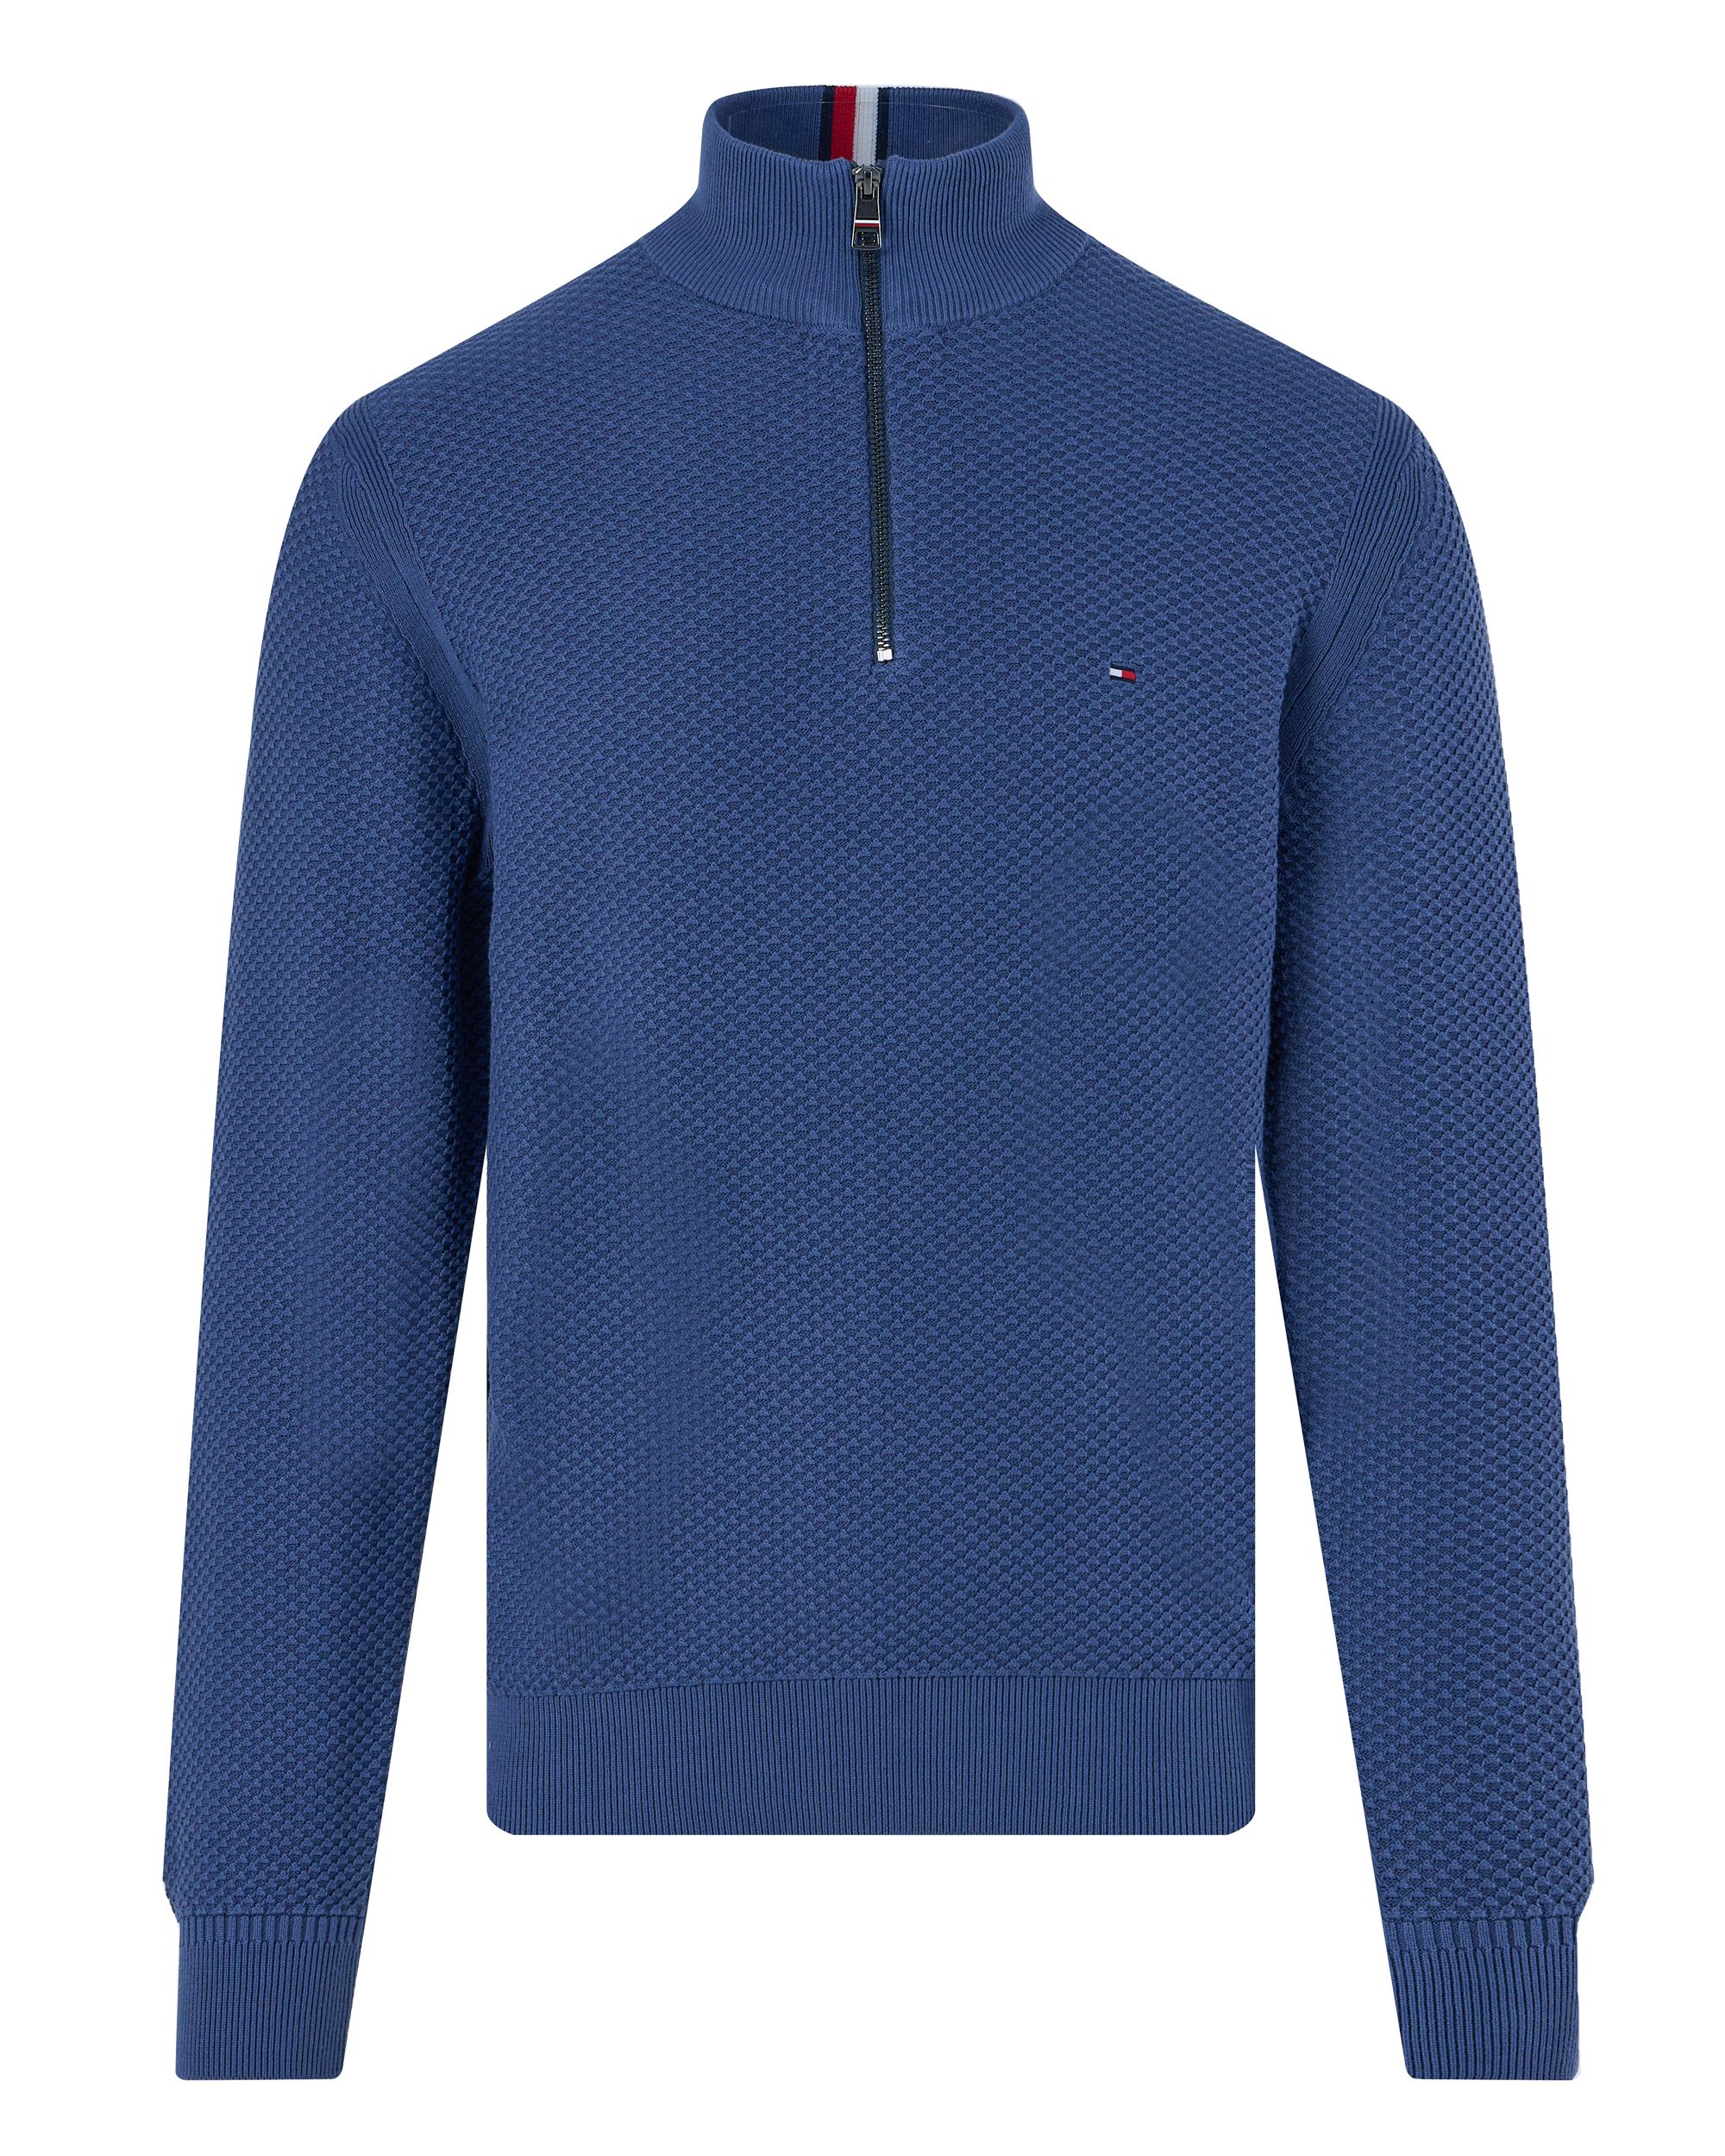 Tommy Hilfiger Menswear Schipperstrui Blauw 094632-001-L